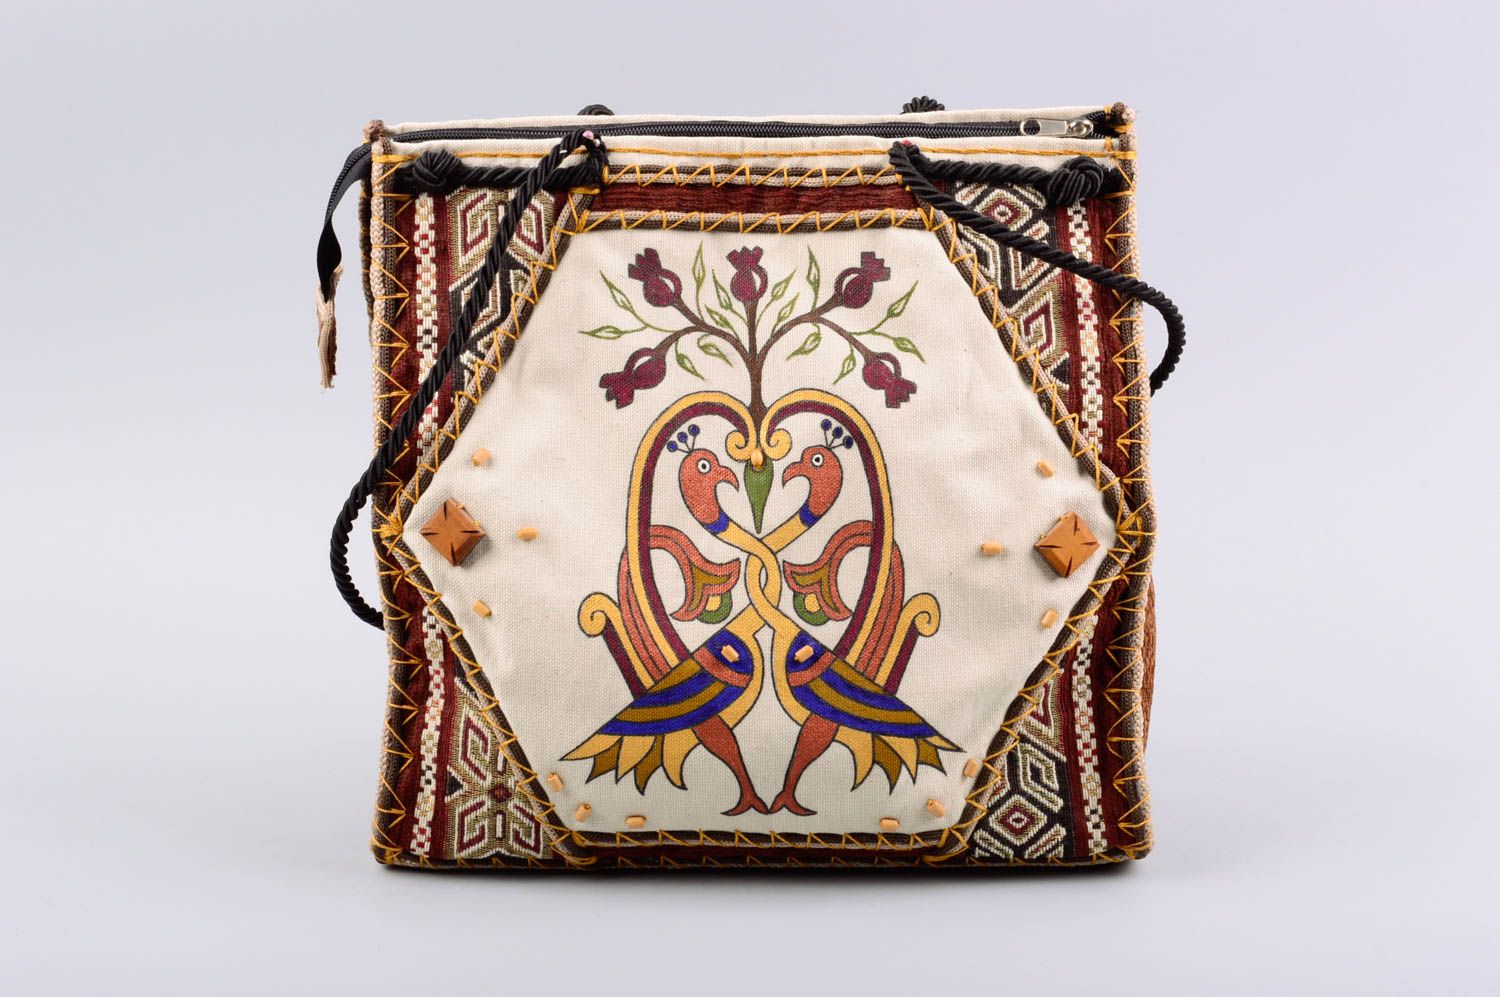 Grand sac à main en tissu fait main avec motifs ethniques design original photo 1